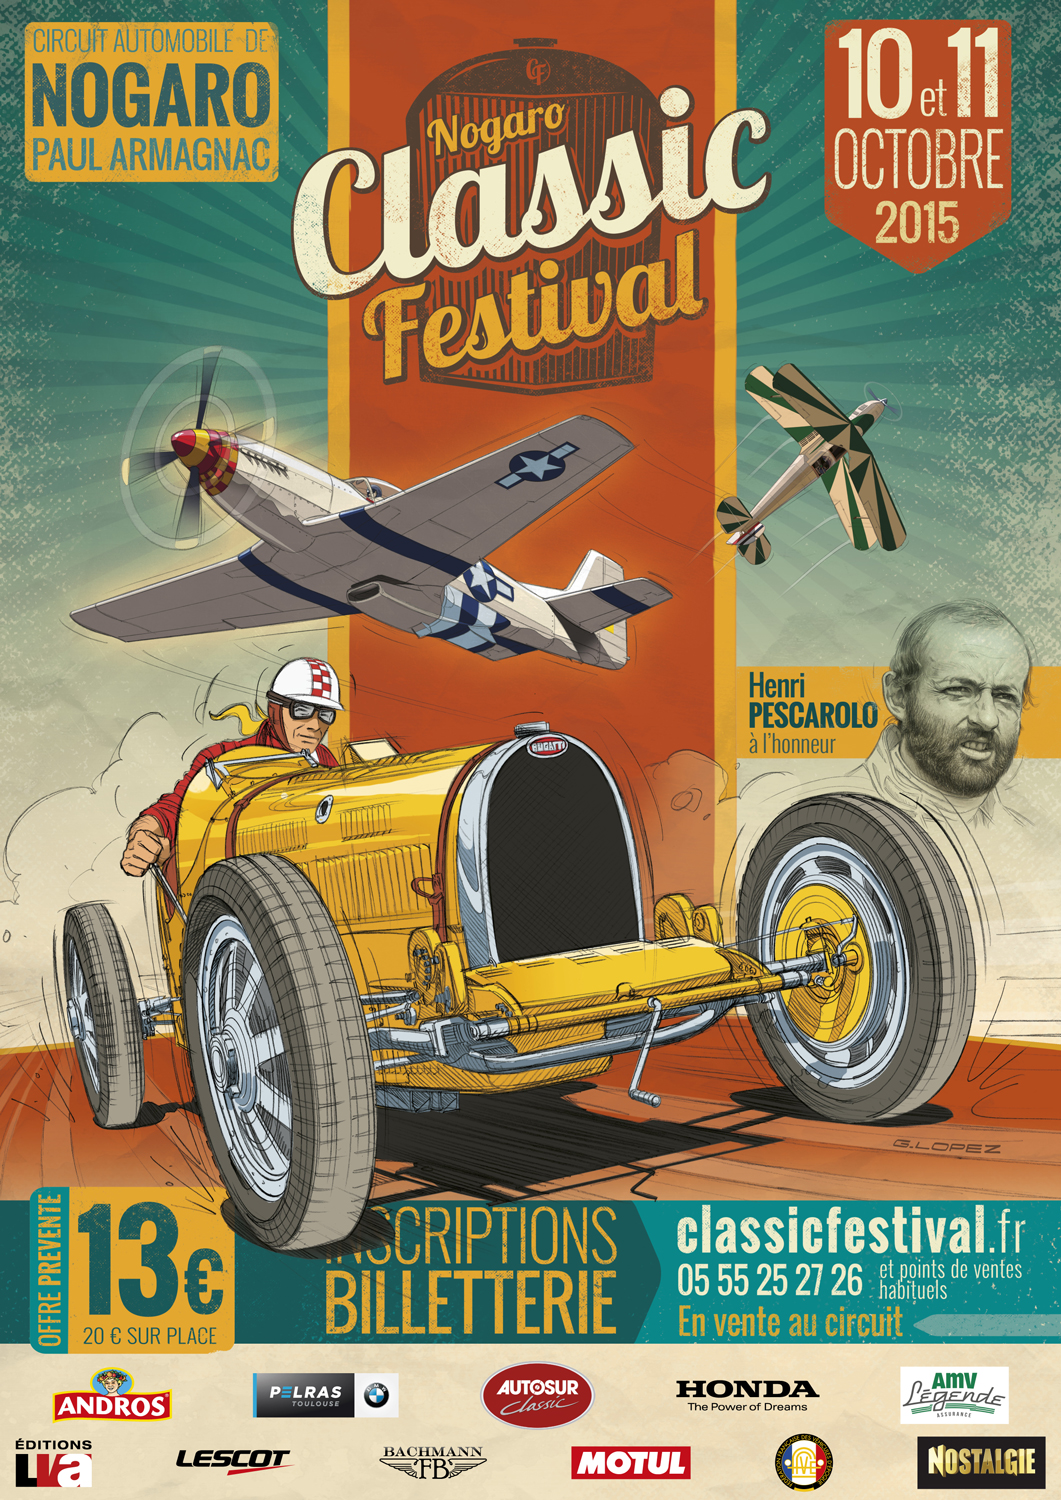 Nogaro Classic Festival CF15-Affiche